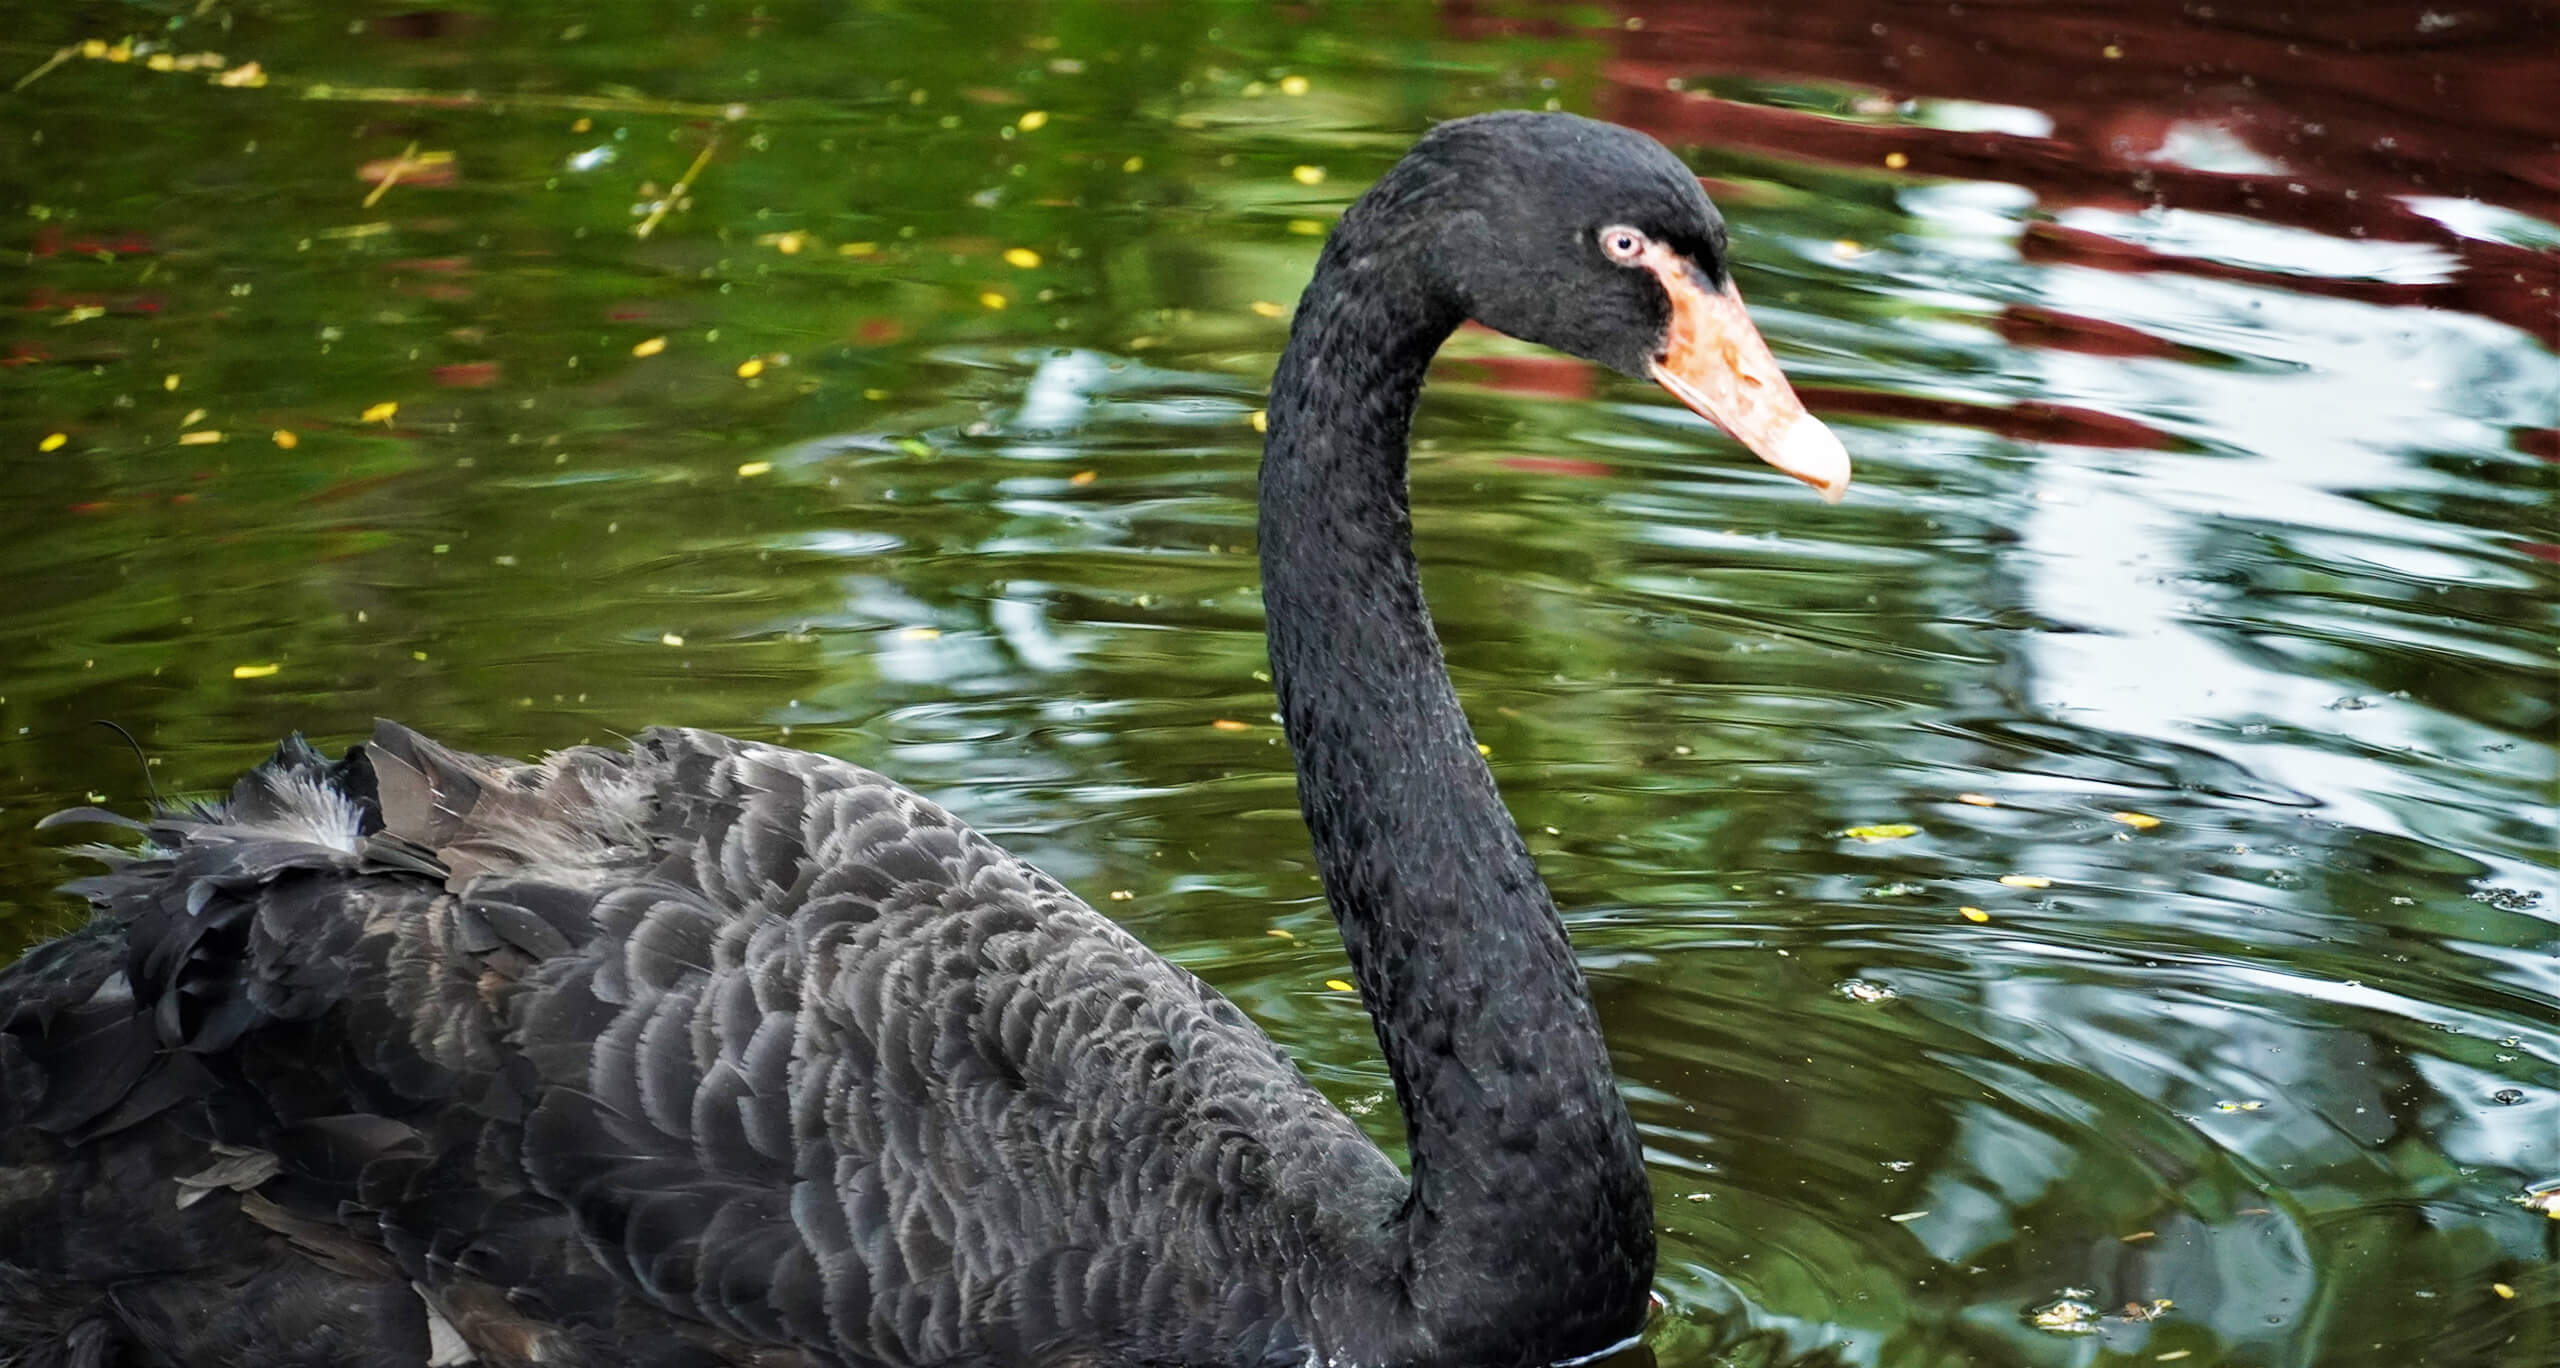 Black Swan or Bluebird: Planning for Disruption